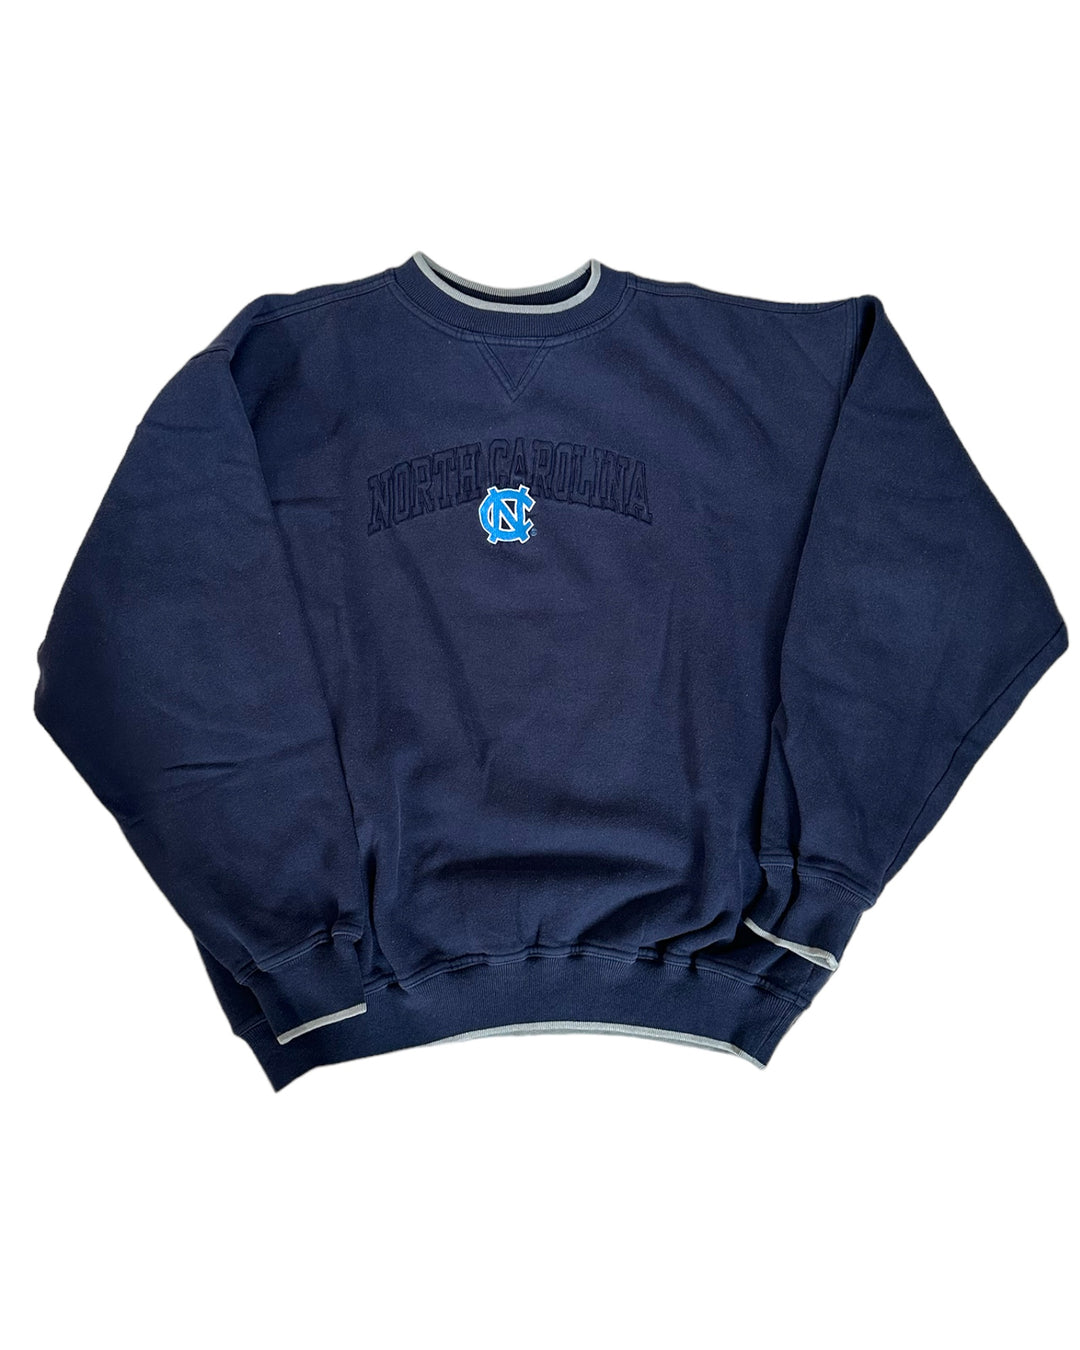 UNC Vintage Sweatshirt